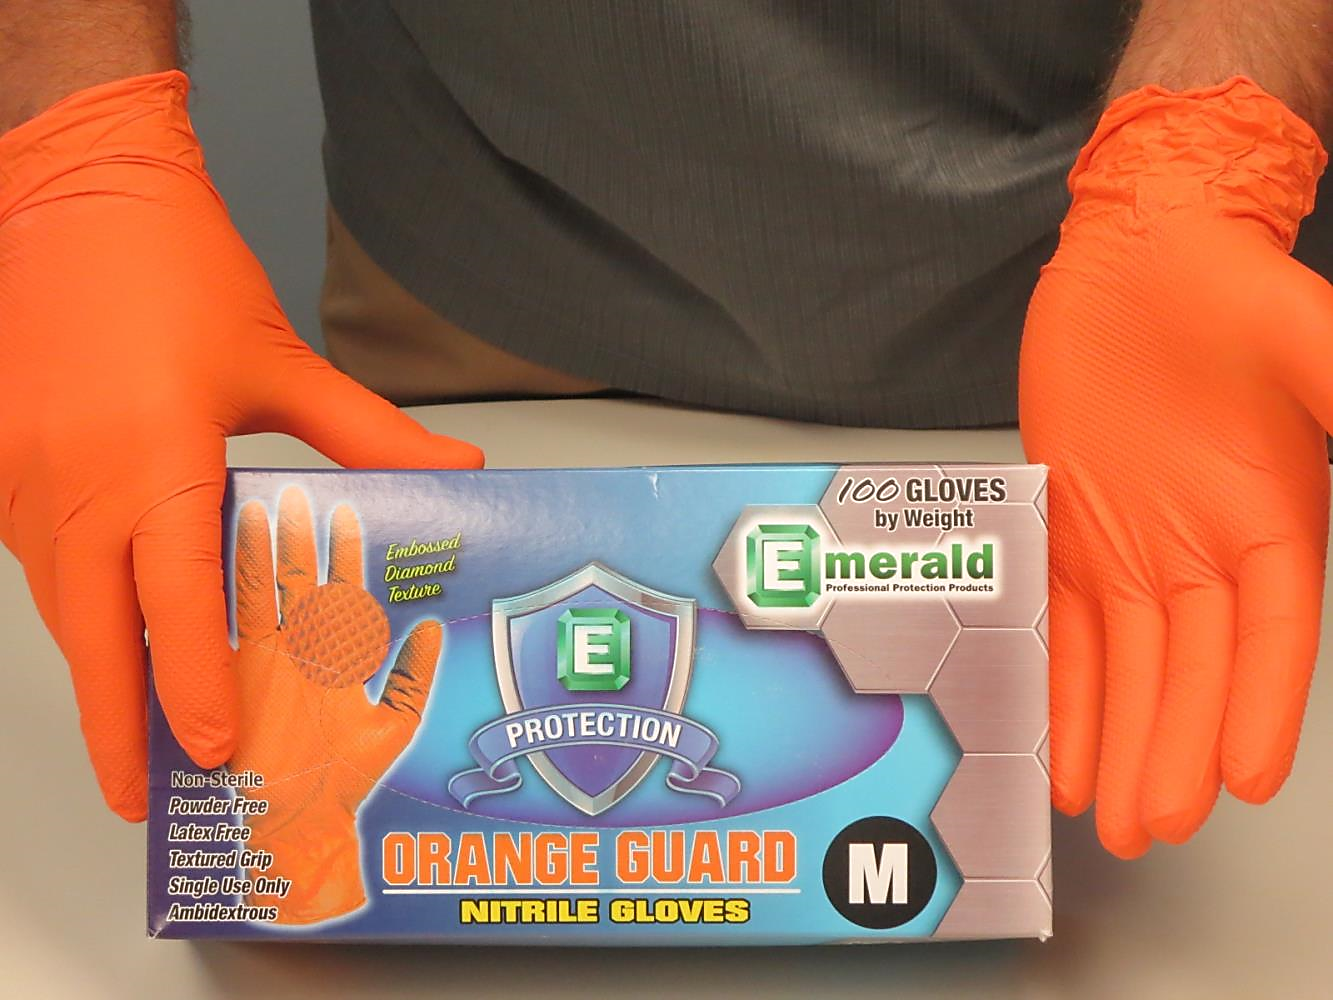 Emerald PPP Guard Orange Nitrile Gloves